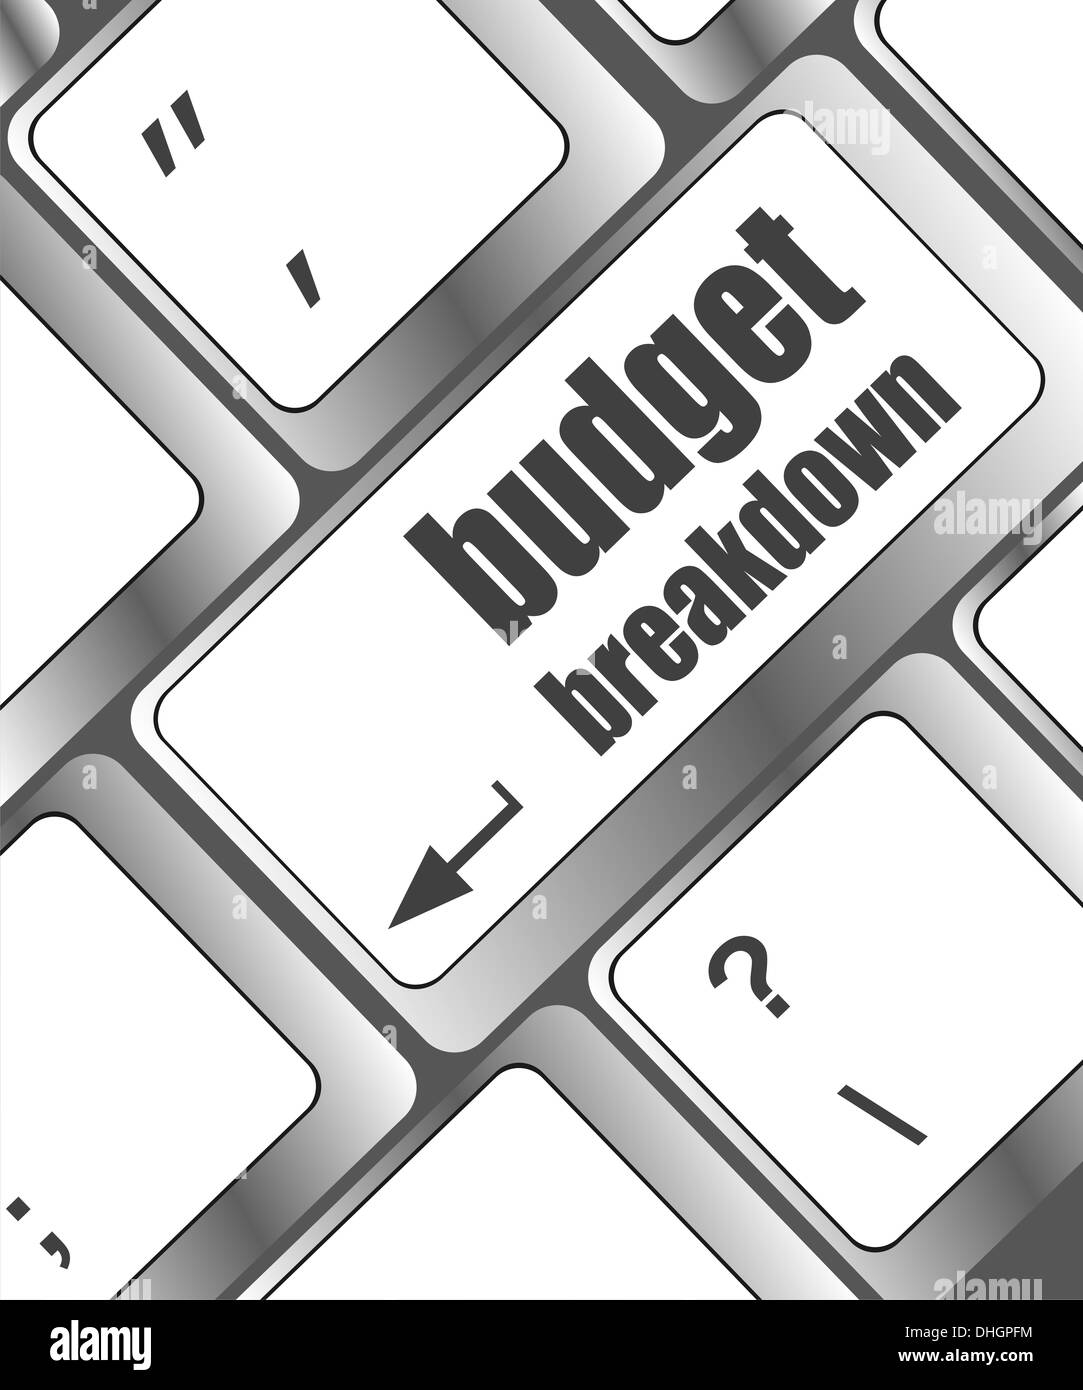 budget breakdown words on computer pc keyboard Stock Photo